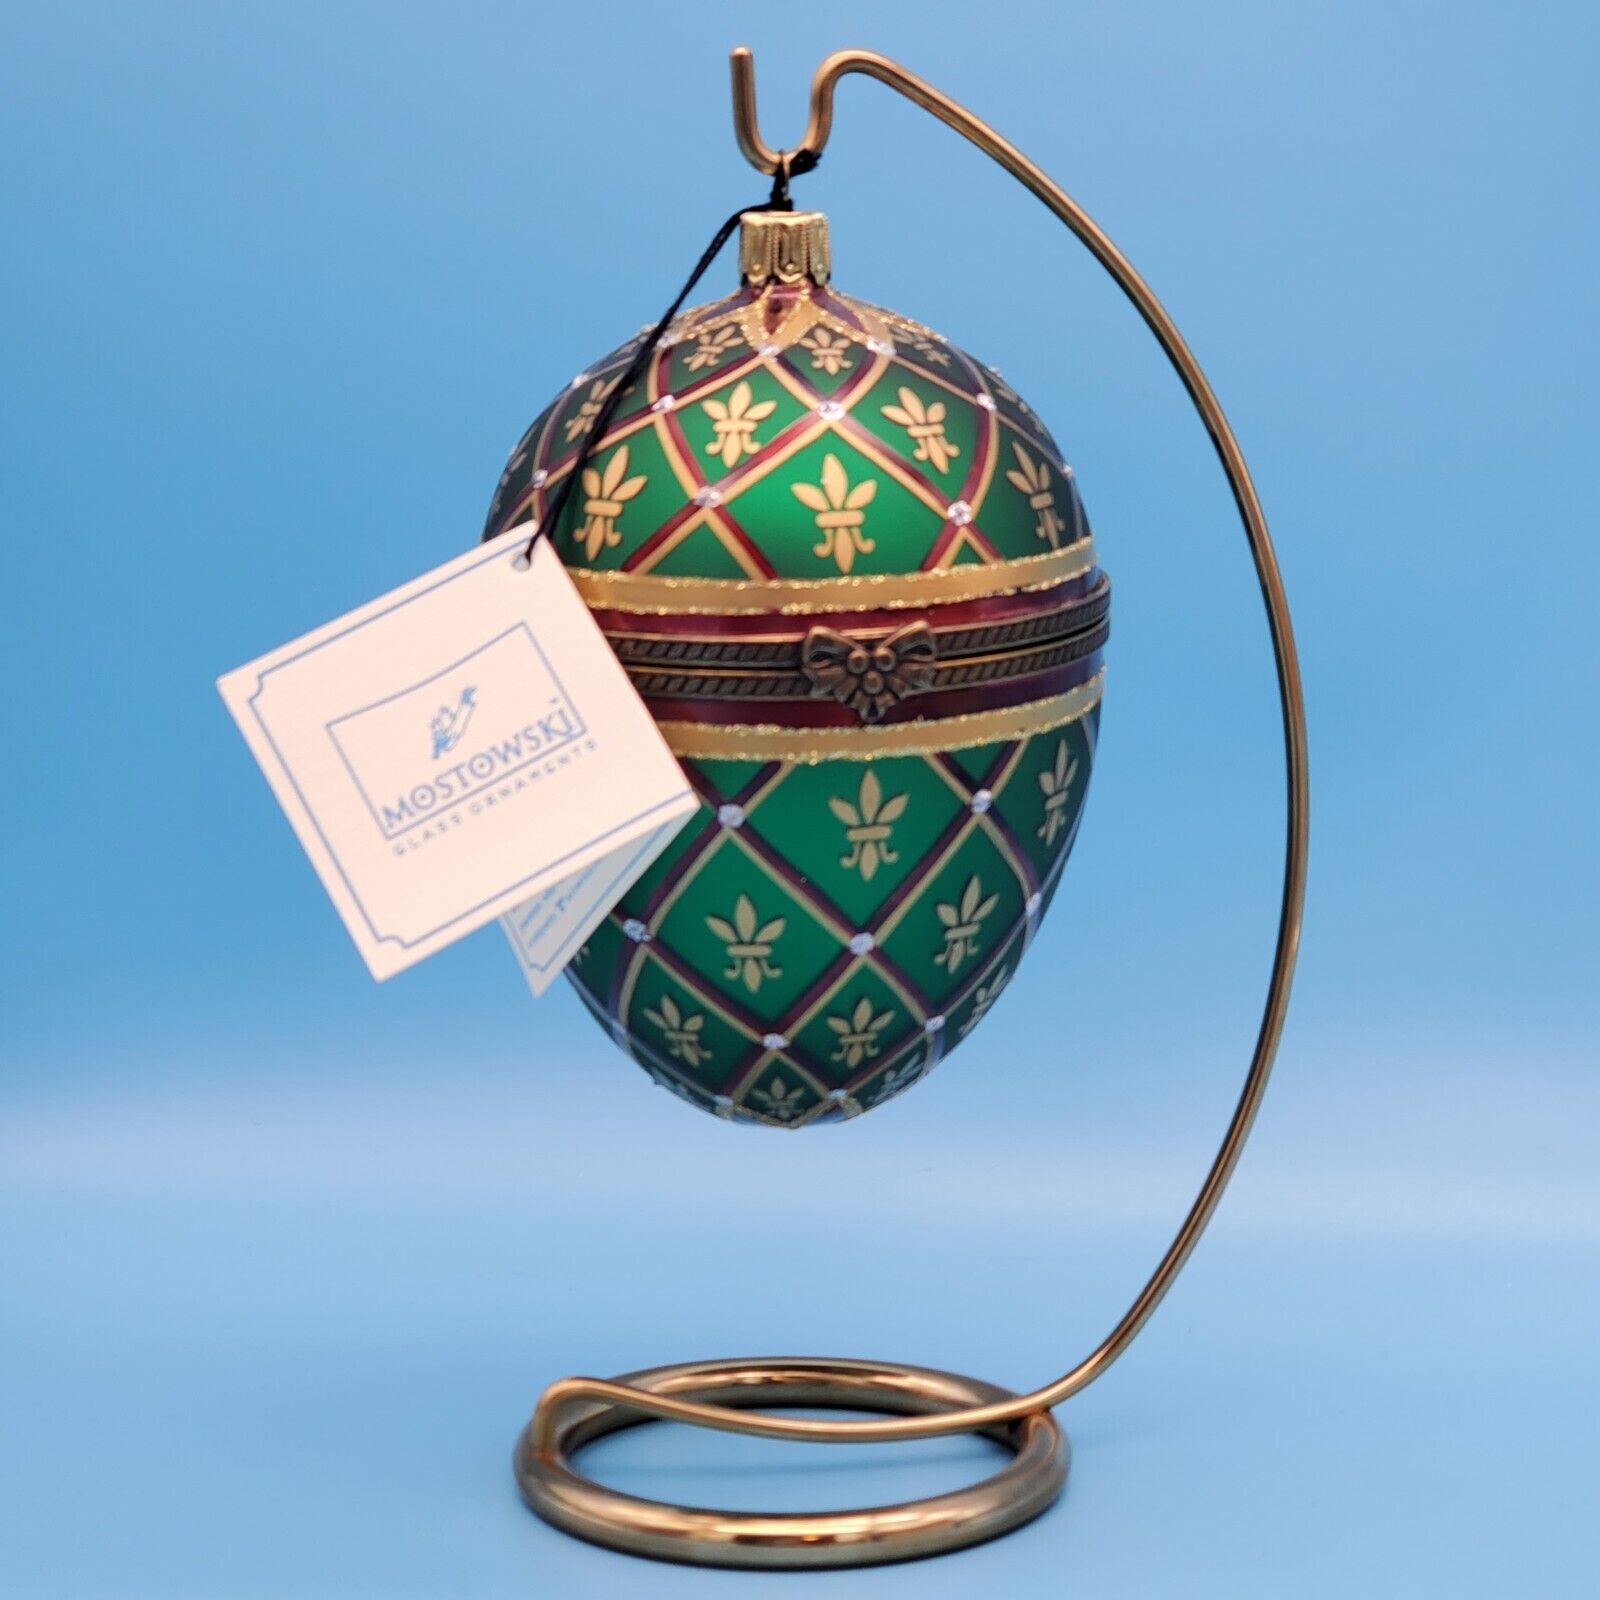 Komozja Mostowski Fleur de Lis Hinged Egg Christmas Ornament with Stand NO BOX